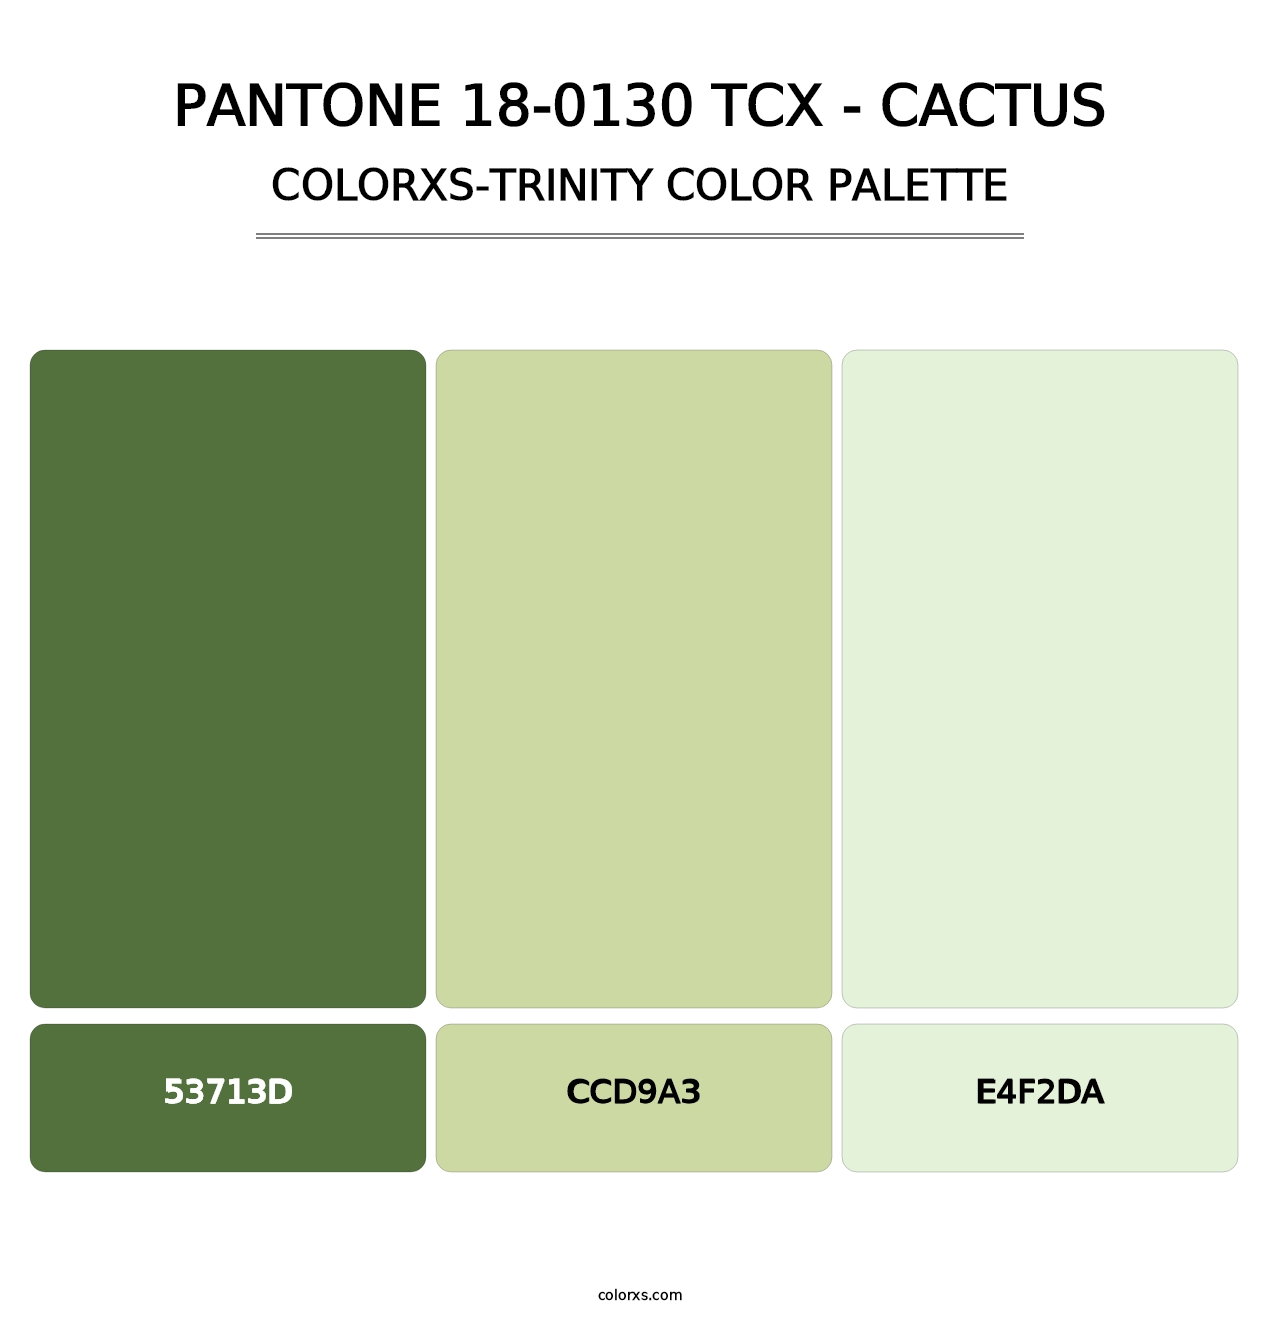 PANTONE 18-0130 TCX - Cactus - Colorxs Trinity Palette